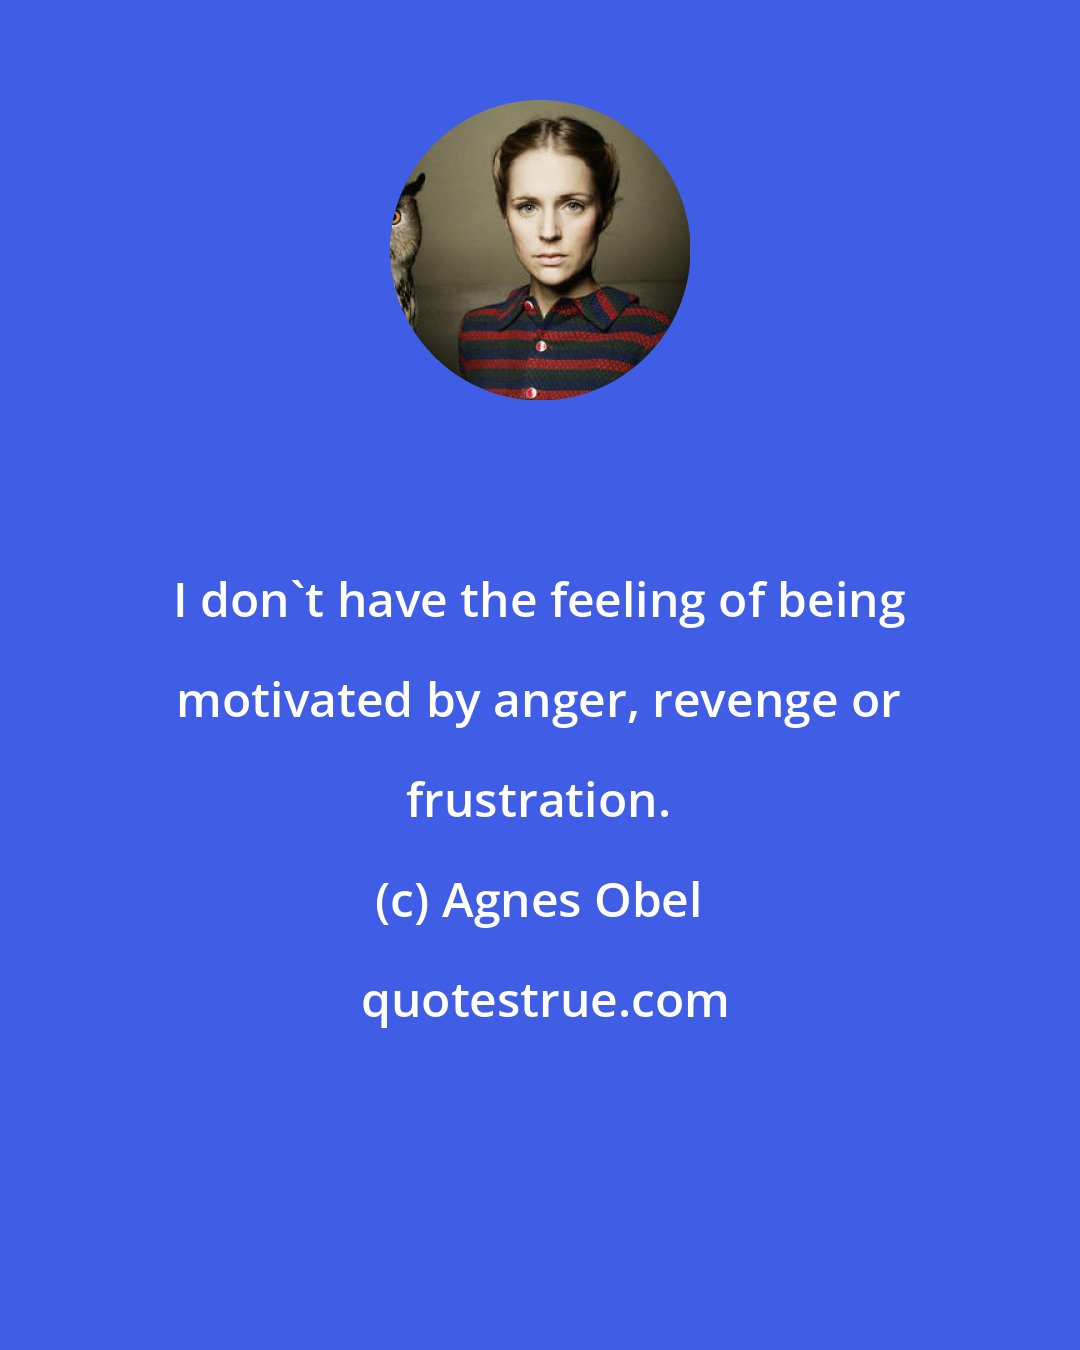 Agnes Obel: I don't have the feeling of being motivated by anger, revenge or frustration.